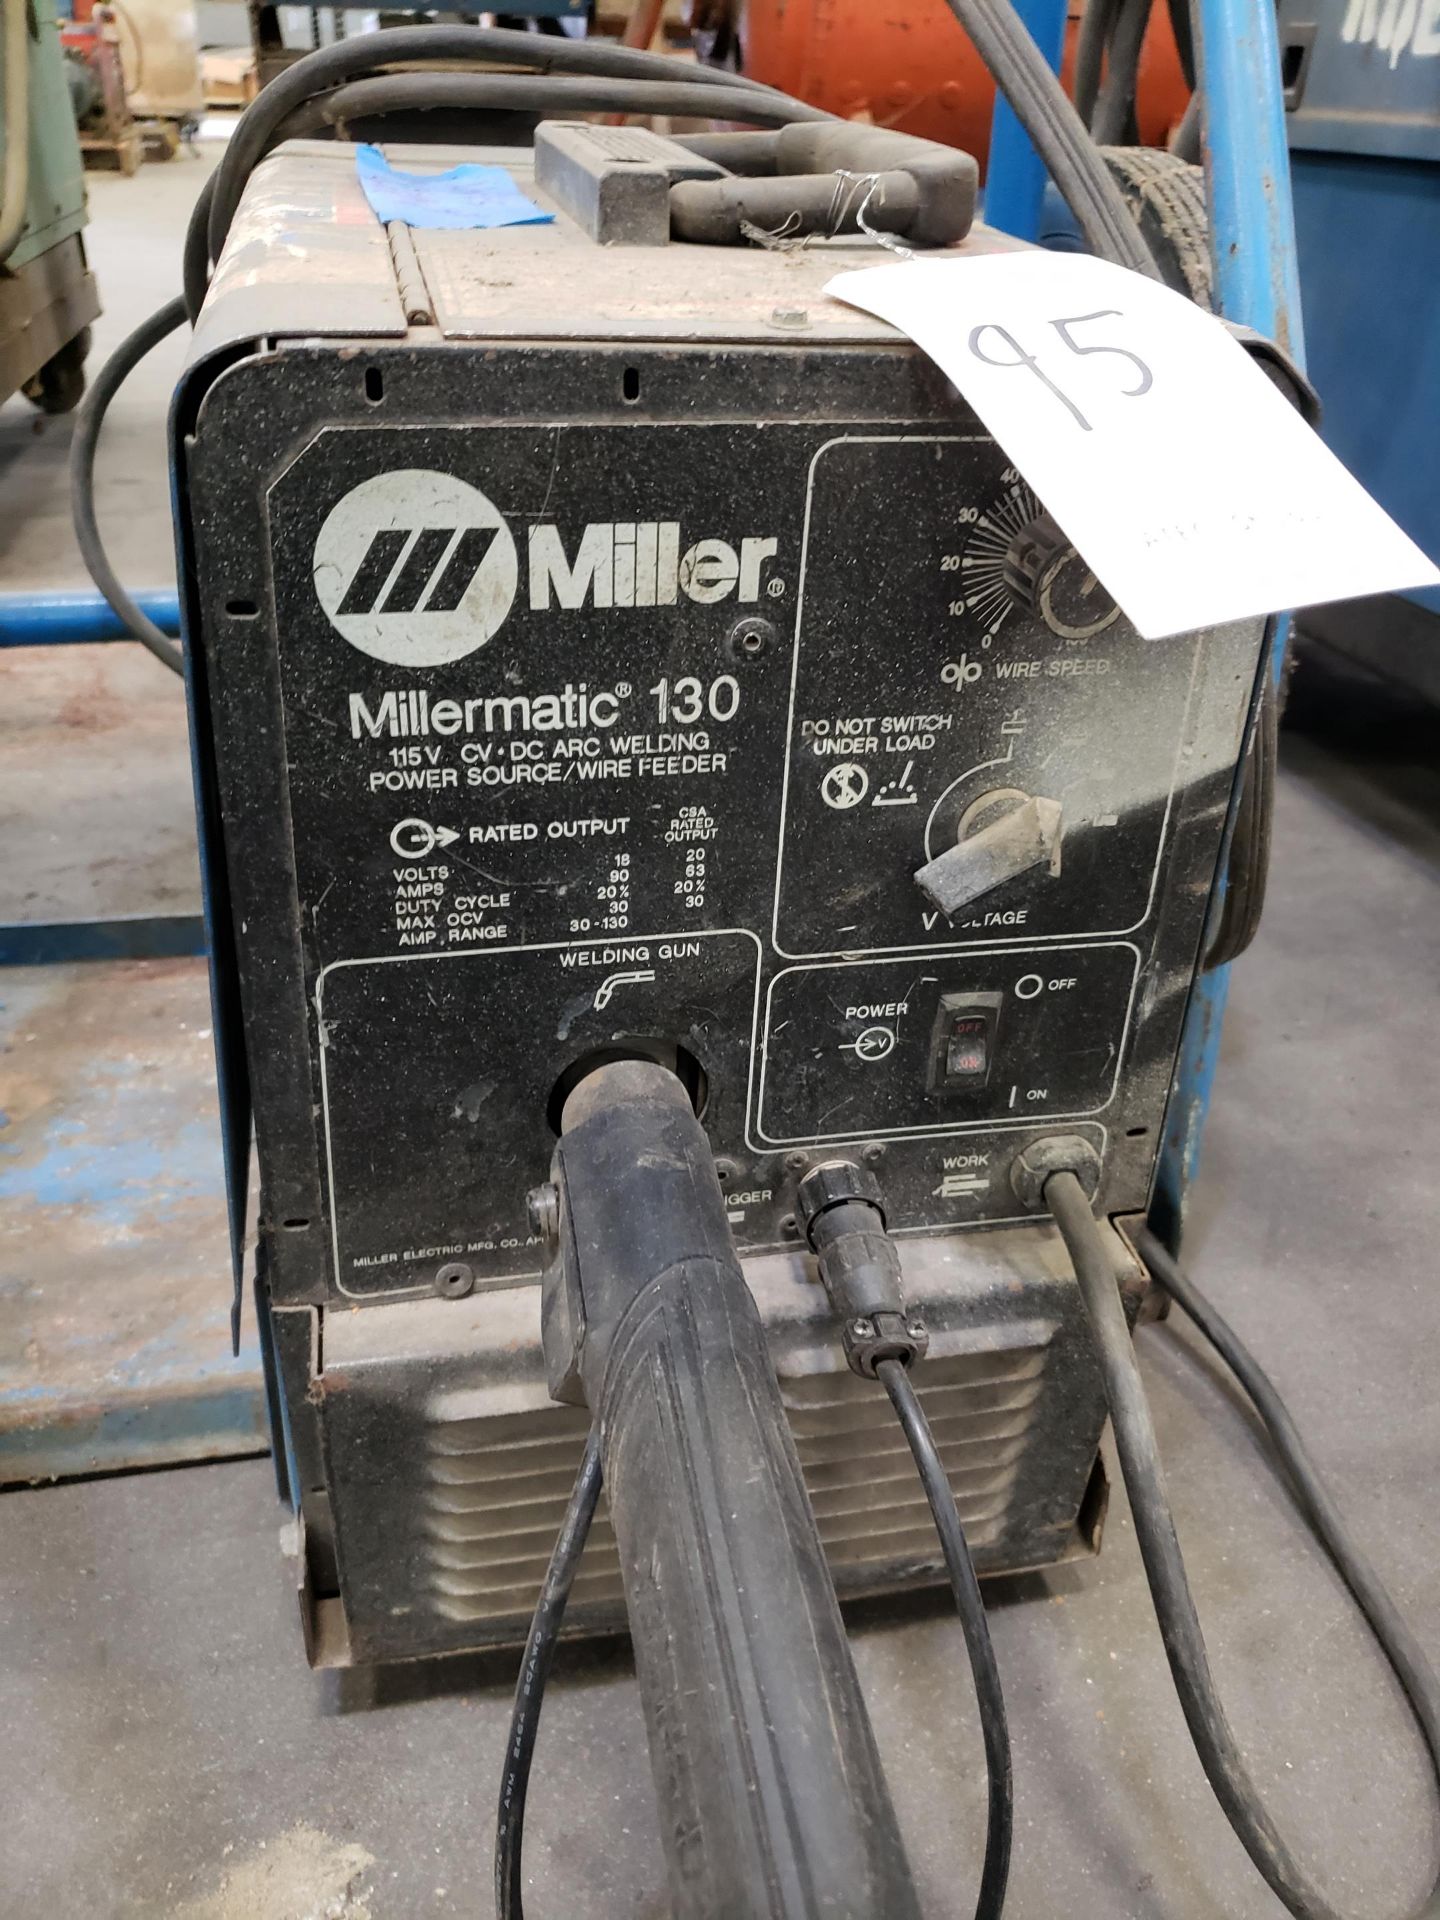 Miller Millermatic 130 Arc Welding Power Source - Image 2 of 3